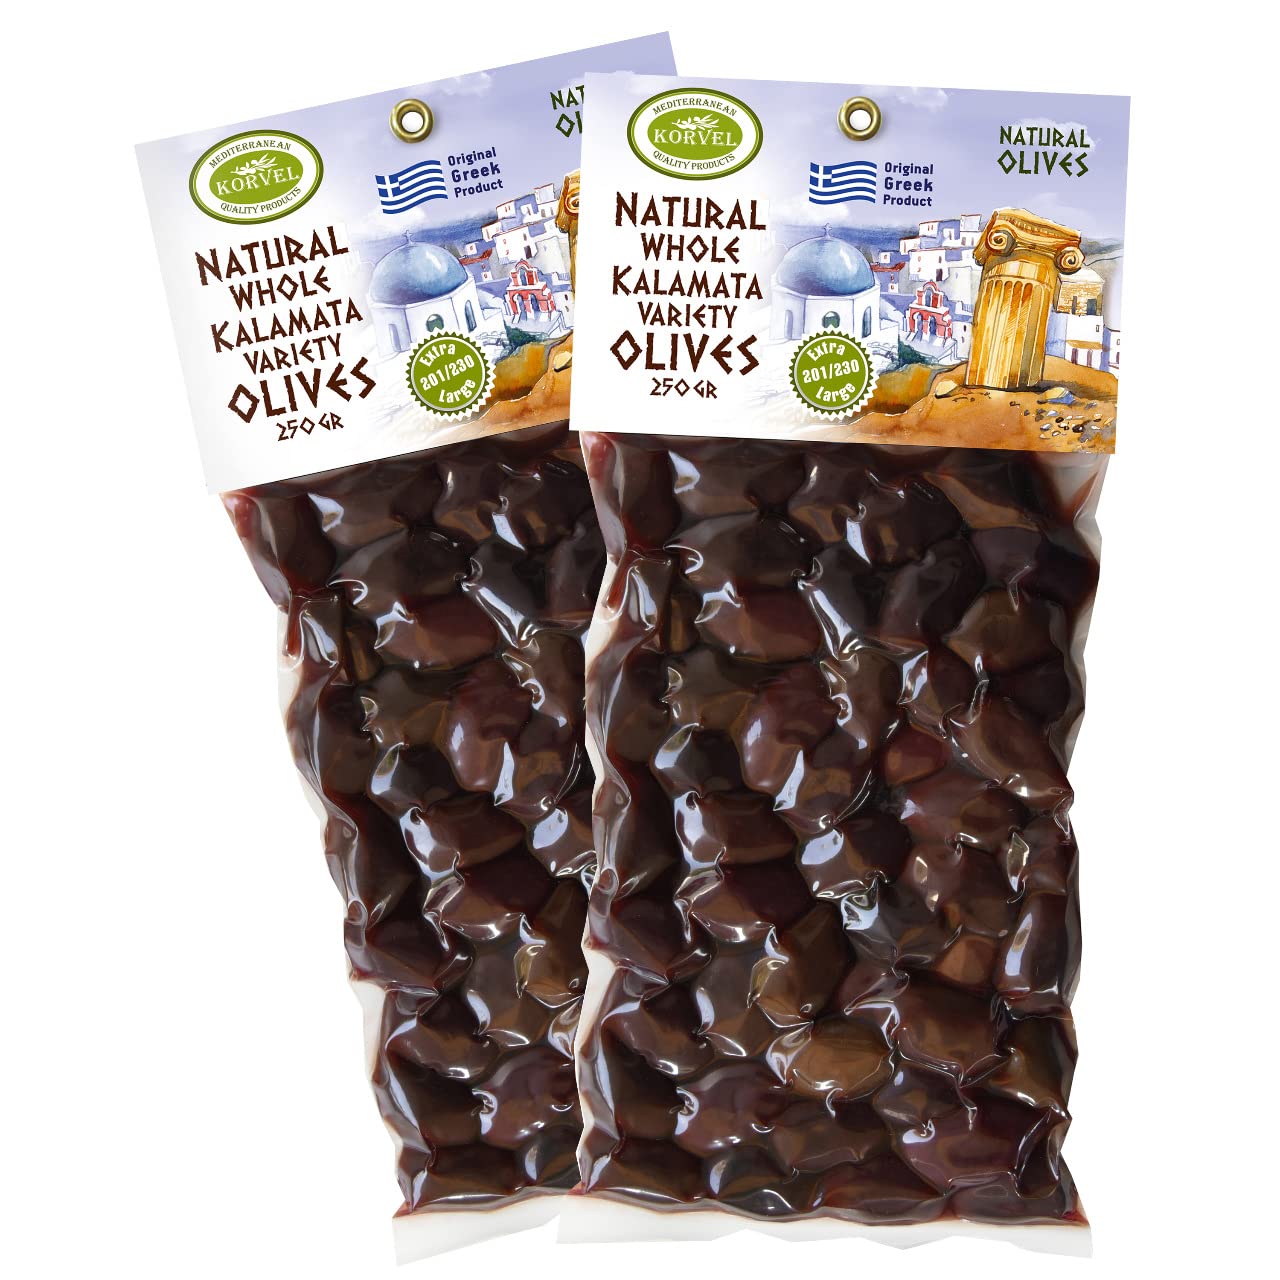 KORVEL Greek Olives Varieties of Kalamata - set of two packs, 2 x 0.55lb - 1.1lb, 2 x 250g - 500g - Vacuum Pack